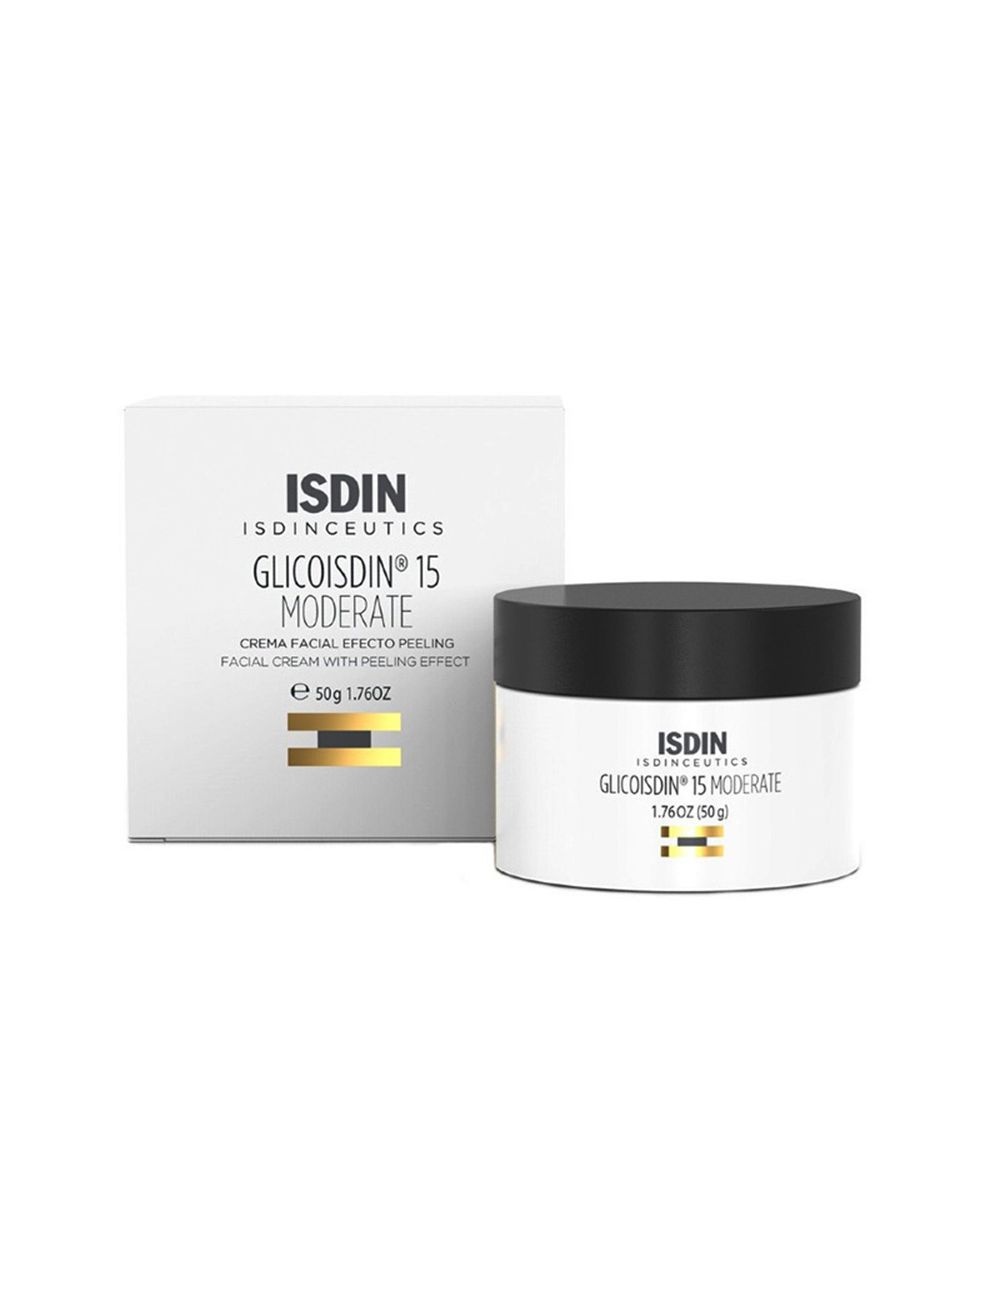 Isdinceutics Glicoisdin 15 Moderate (ISDIN)